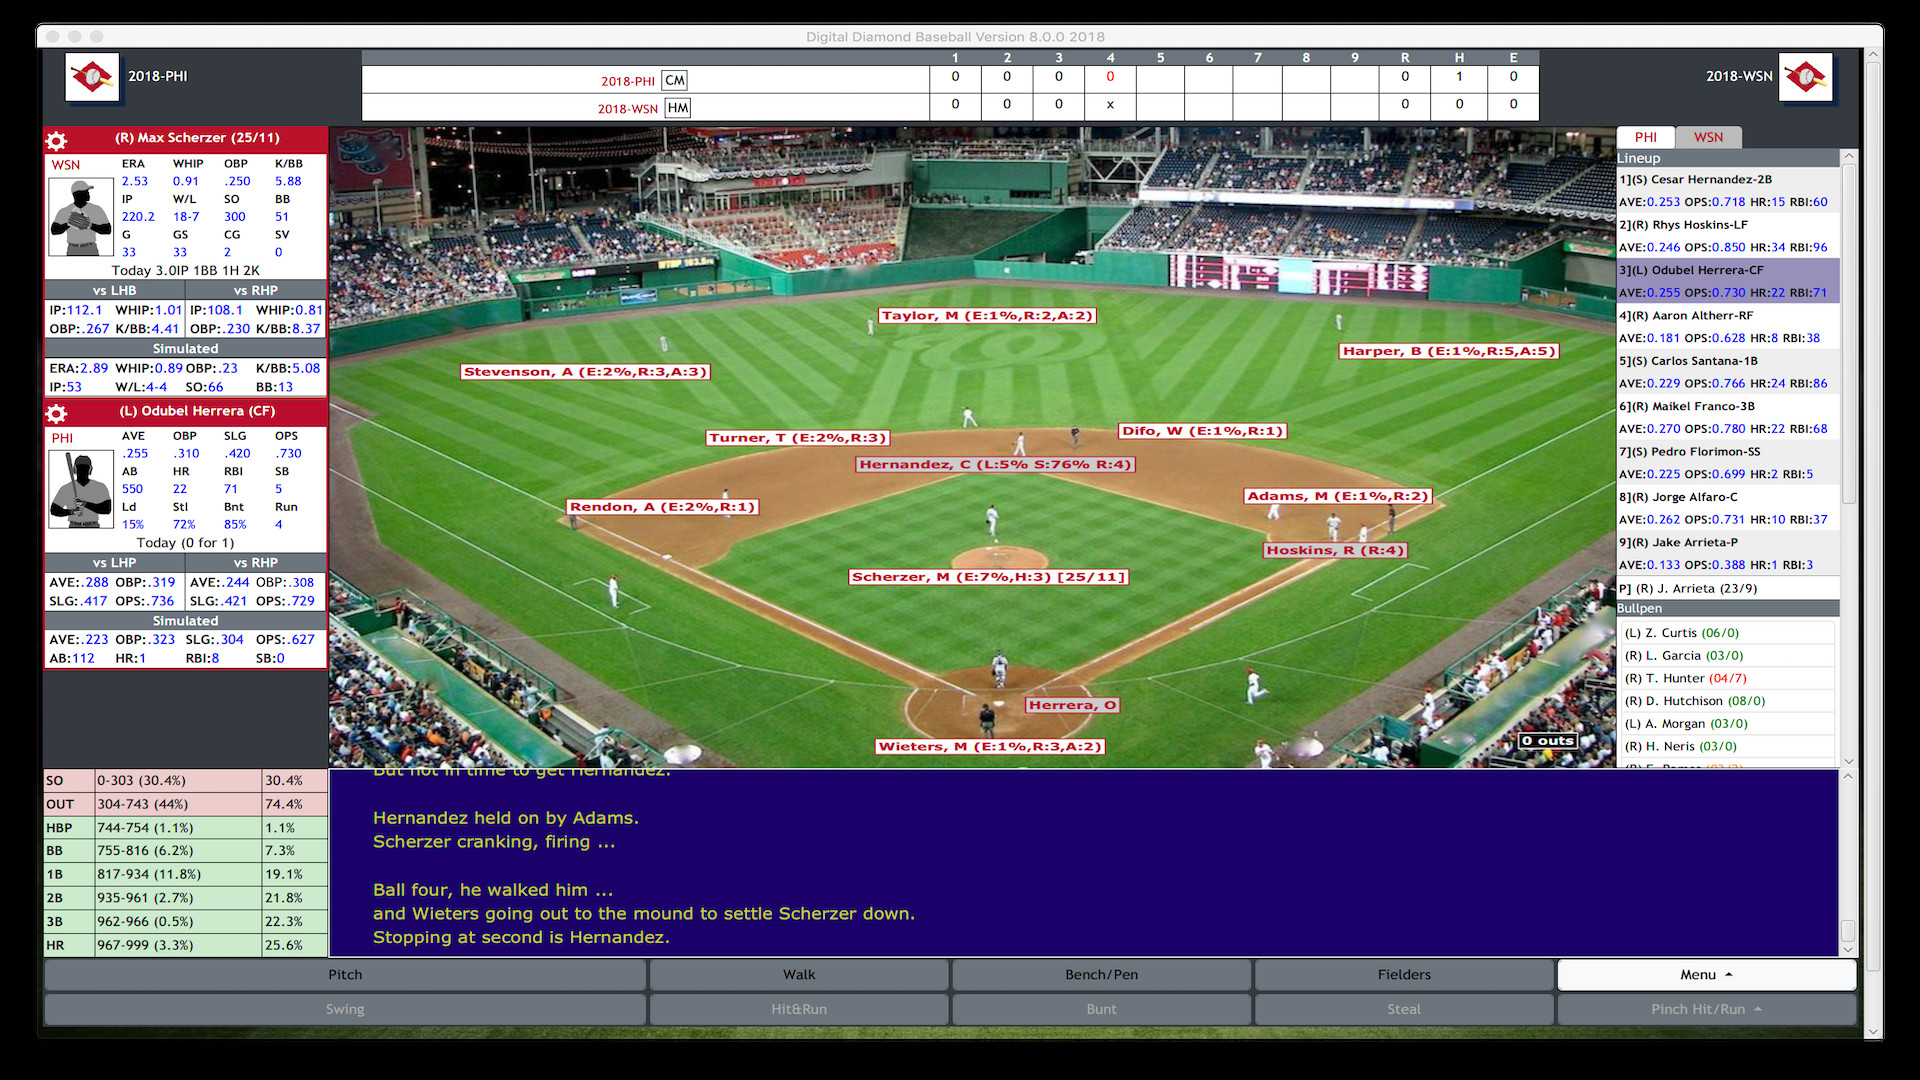 Digital Diamond Baseball V8 Free Download